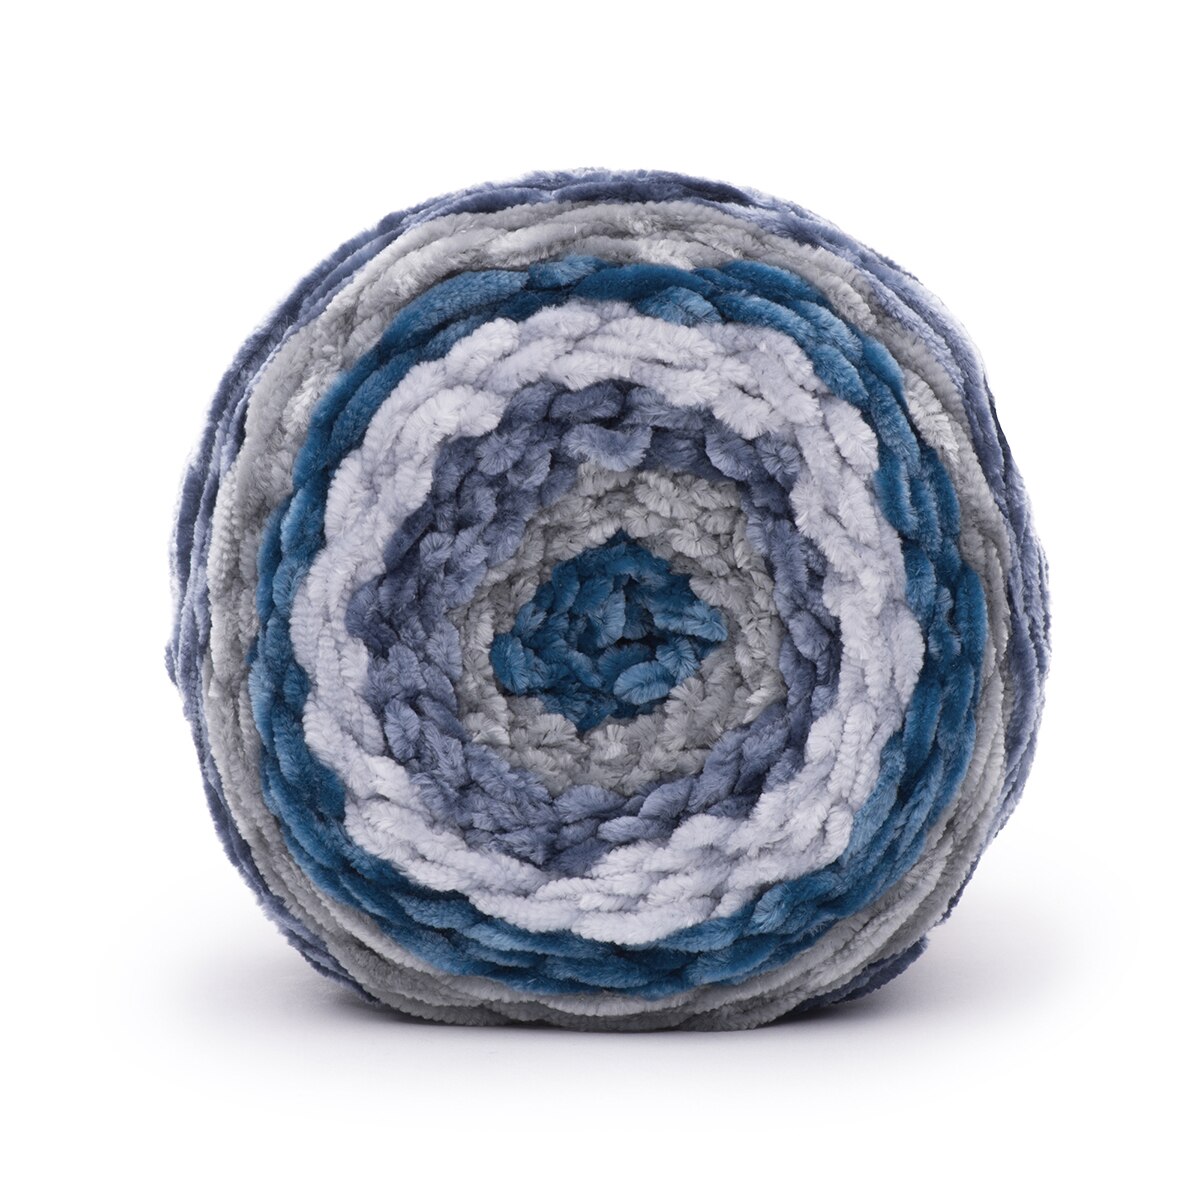 Bernat velvet yarn patterns knit